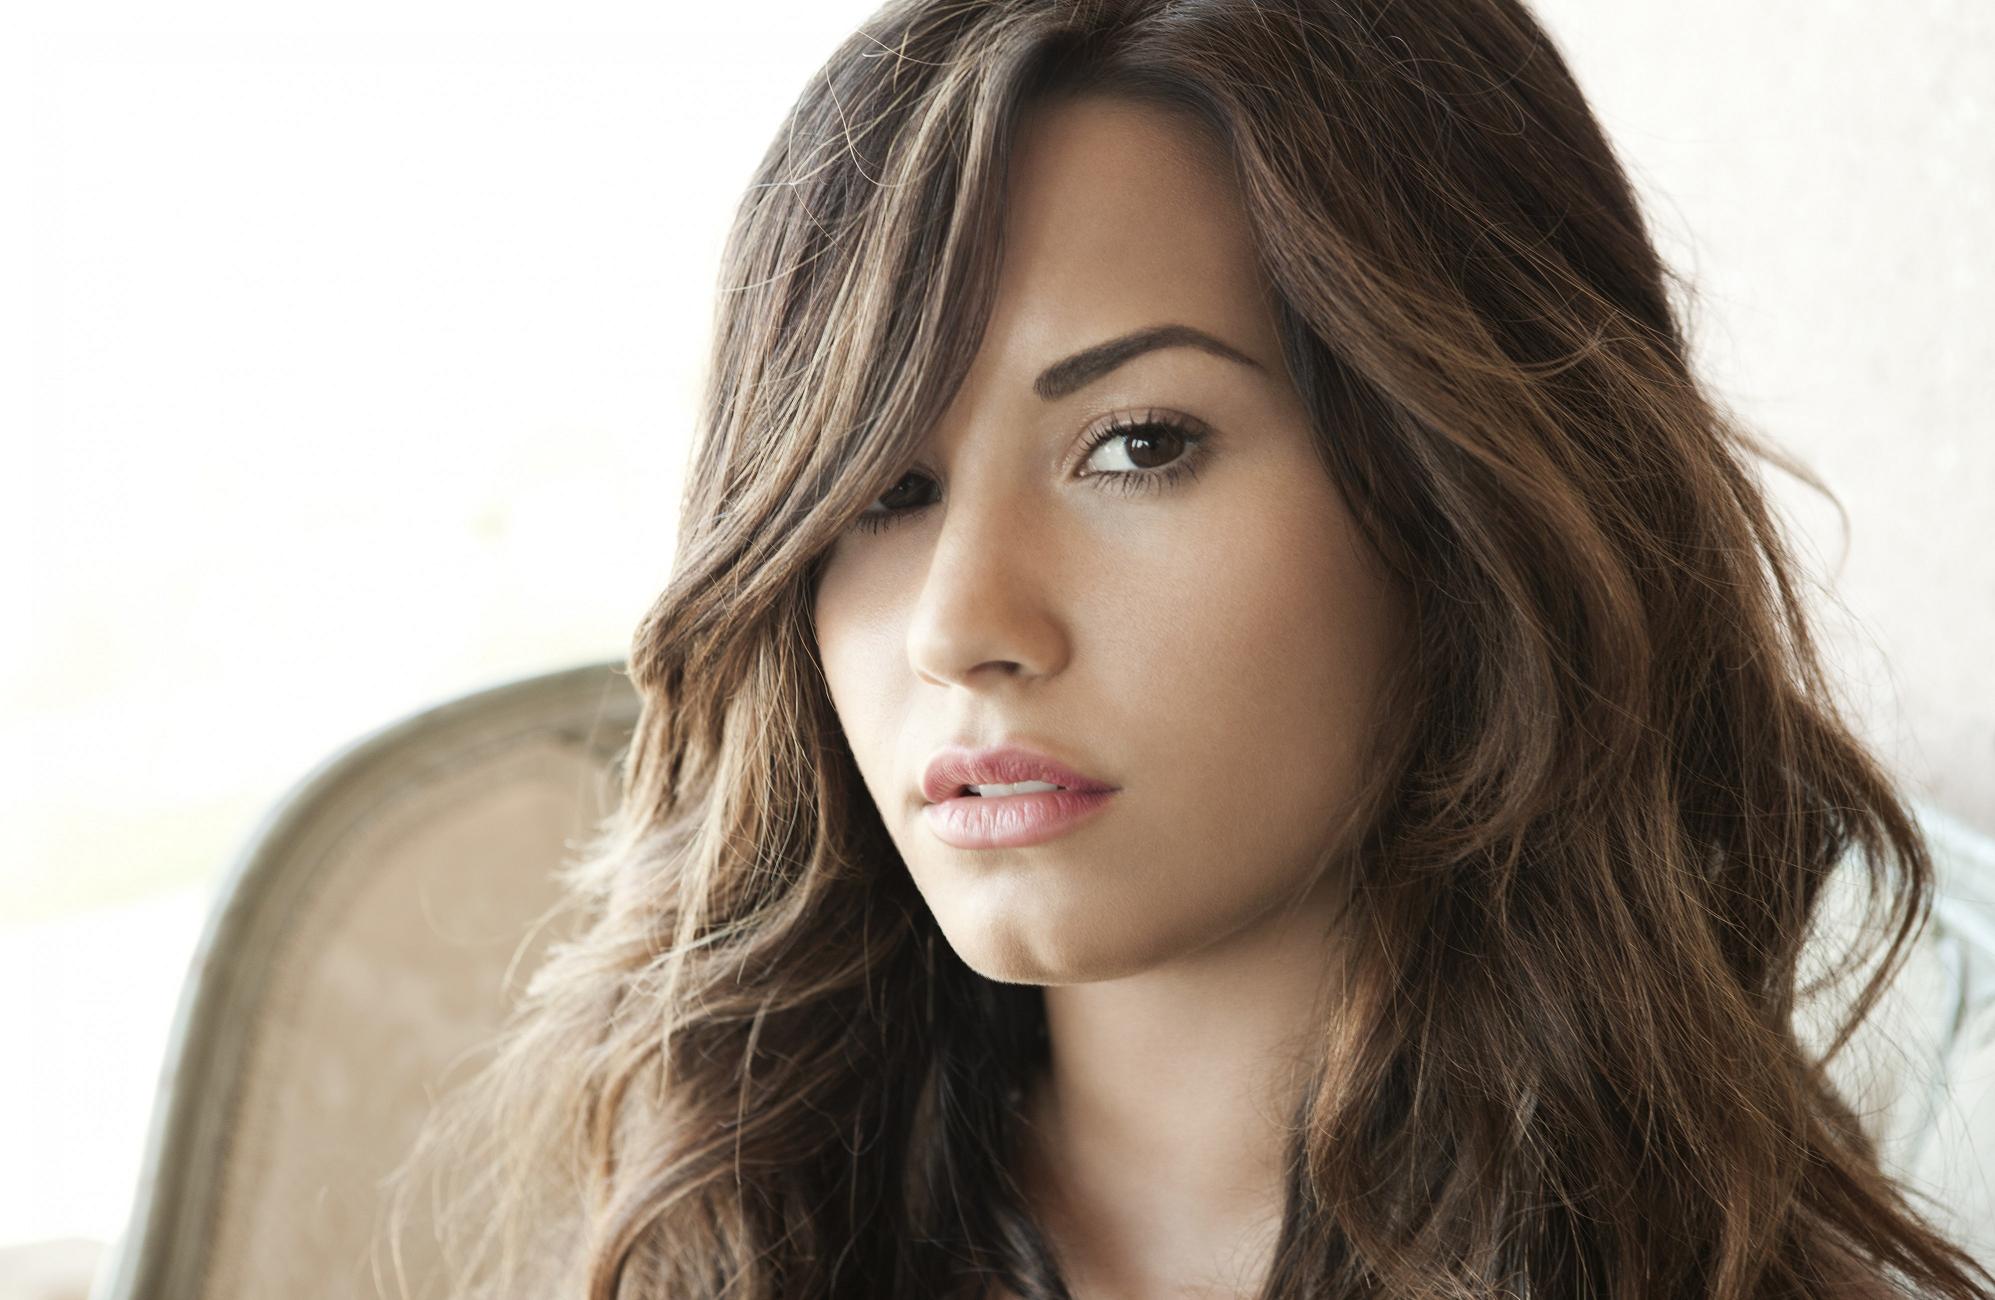 Demi Lovato photo 2501 of 4311 pics, wallpaper - photo #526542 - ThePlace21995 x 1300